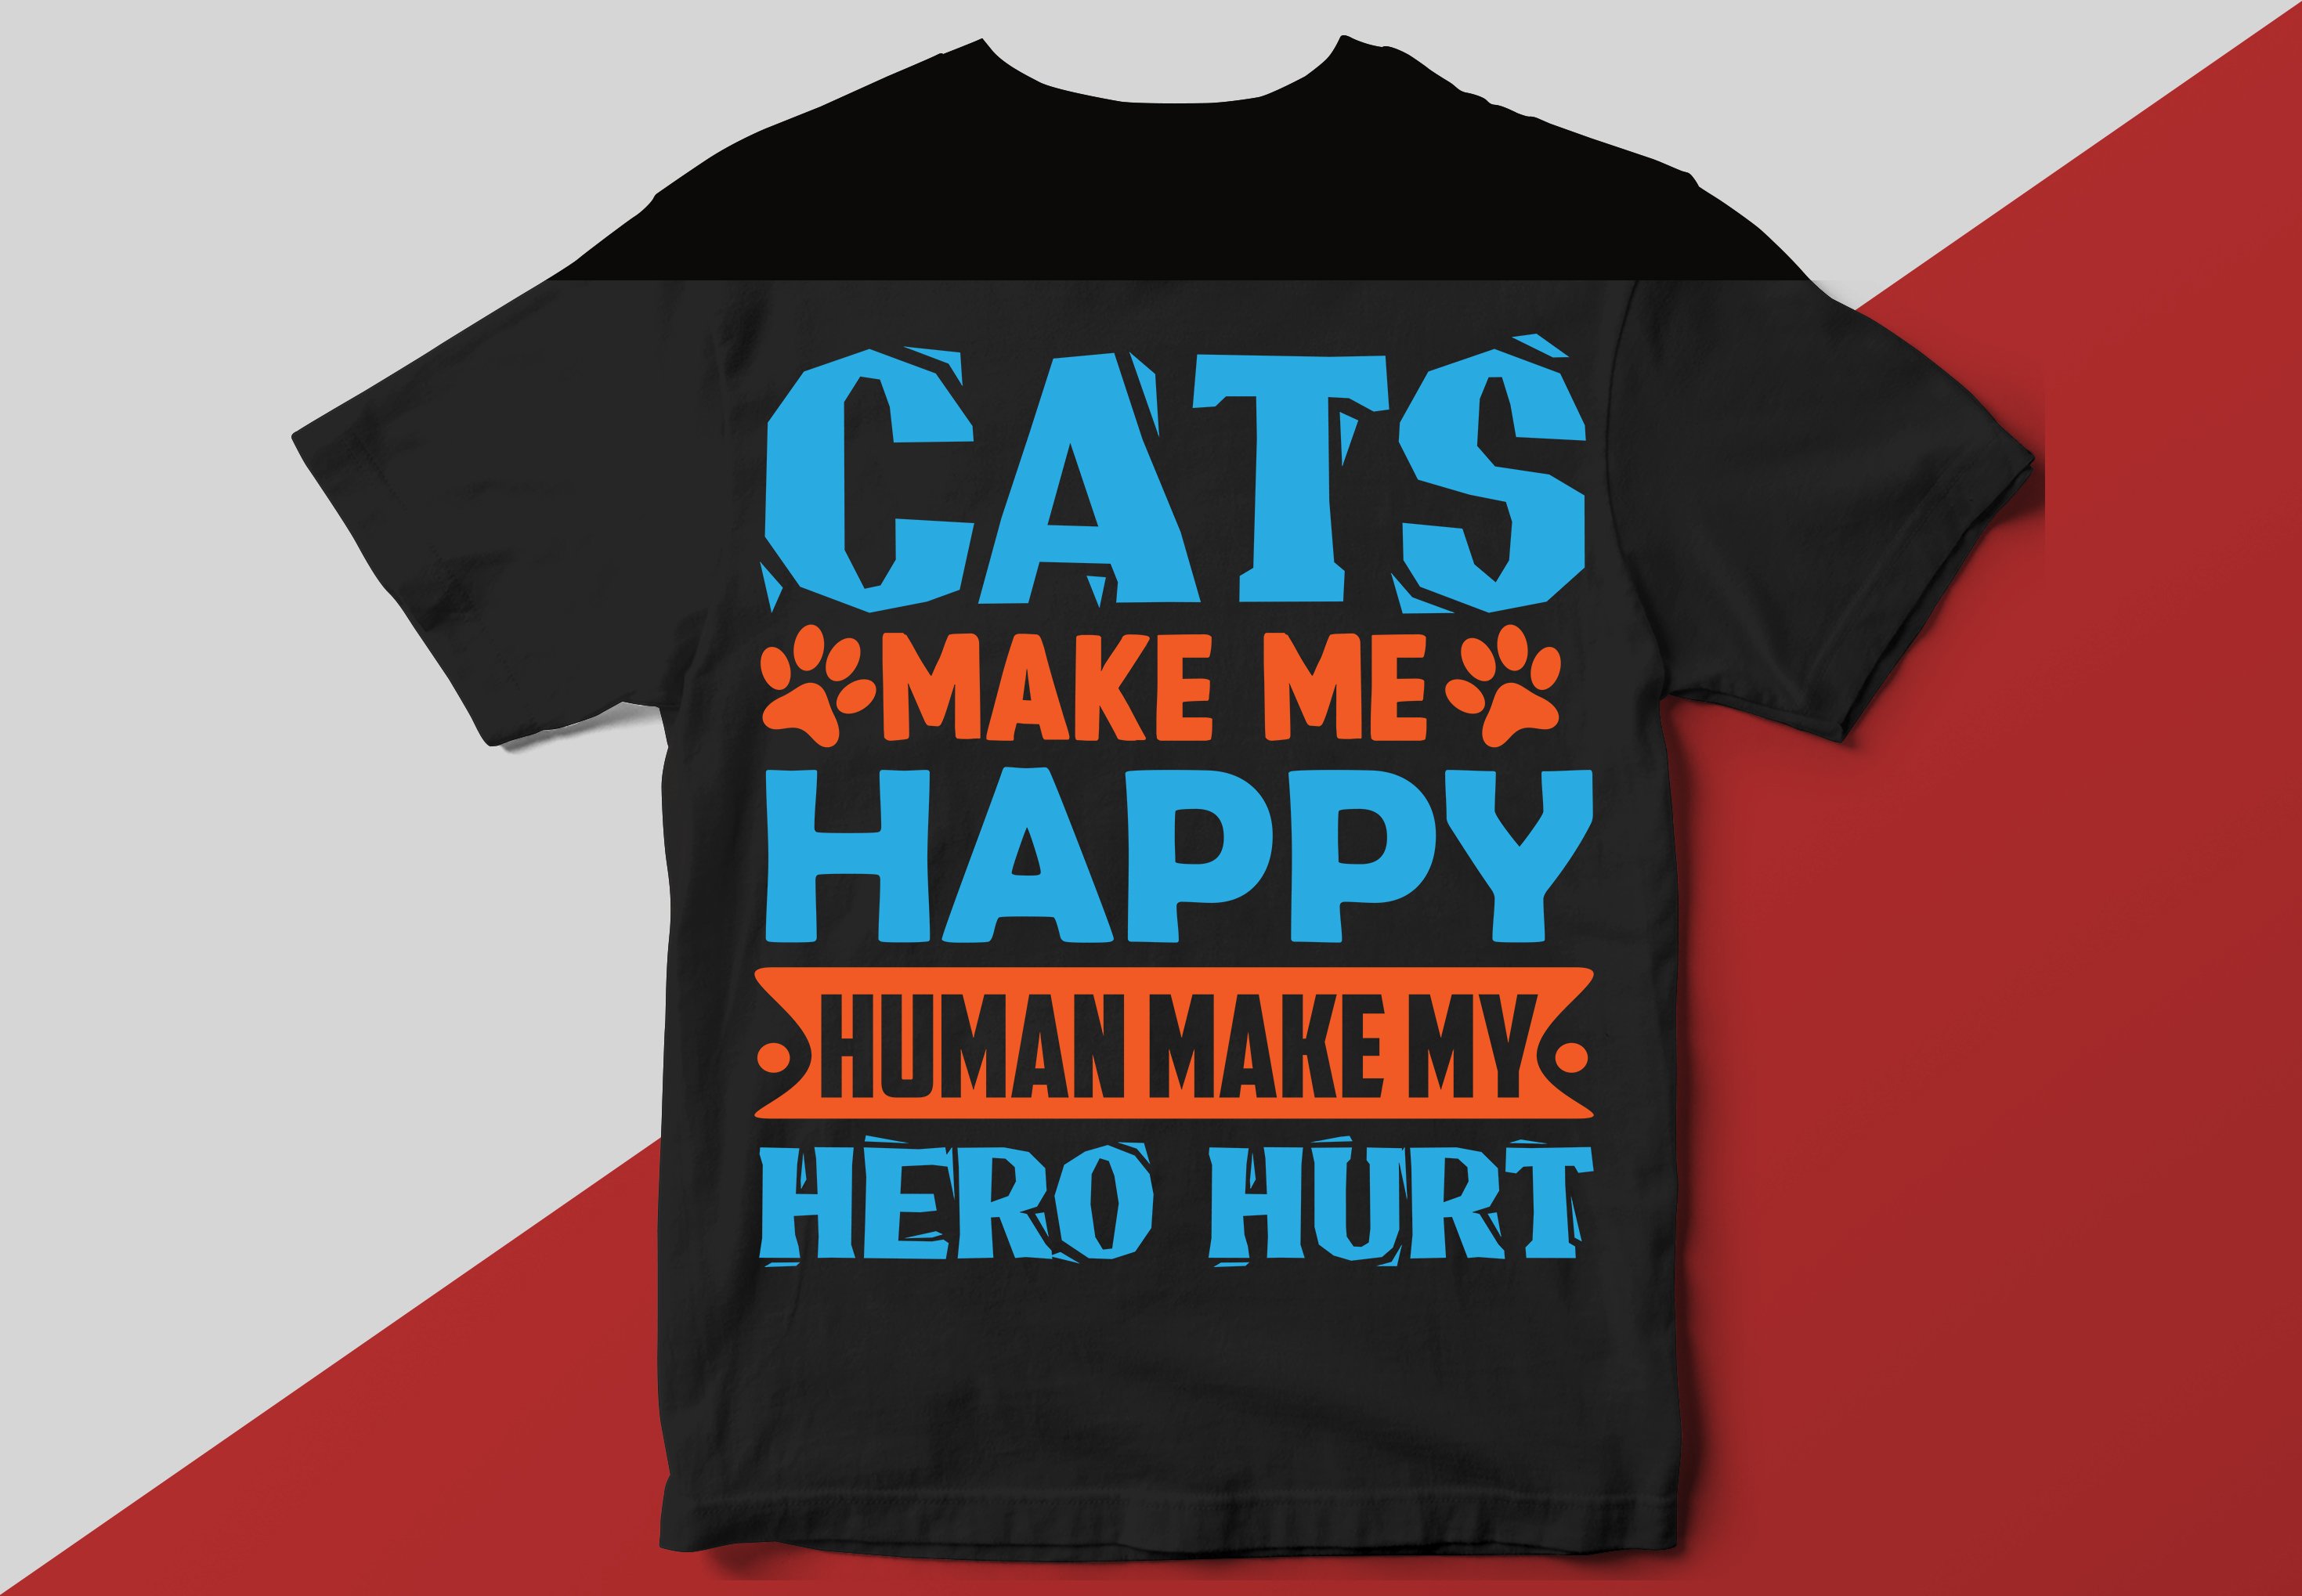 Cats make me happy human make my hero hurt.